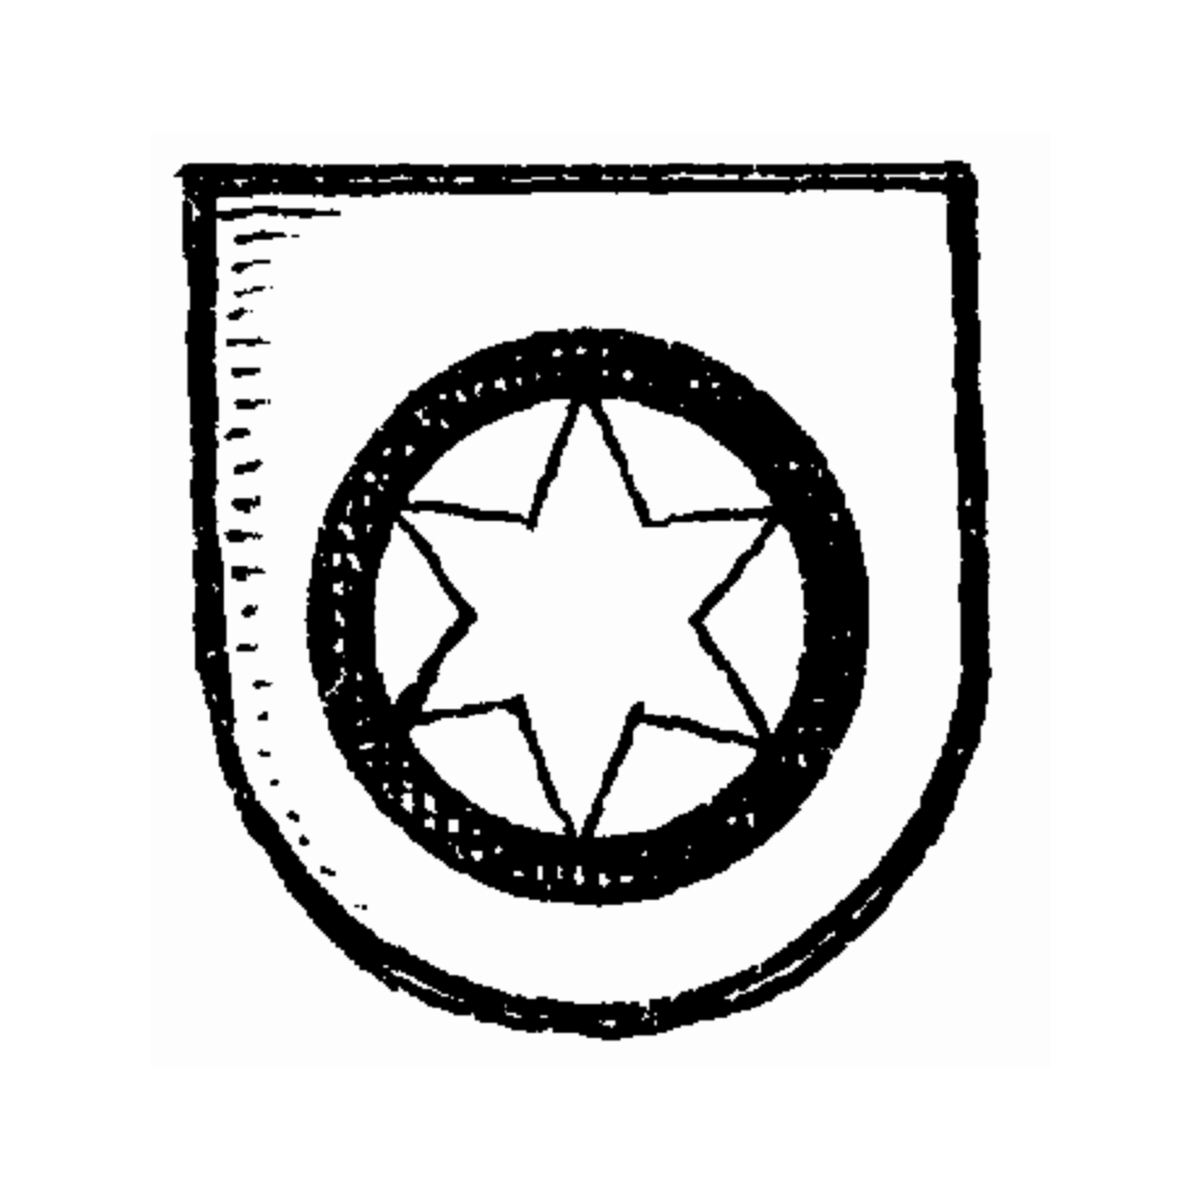 Wappen der Familie Den